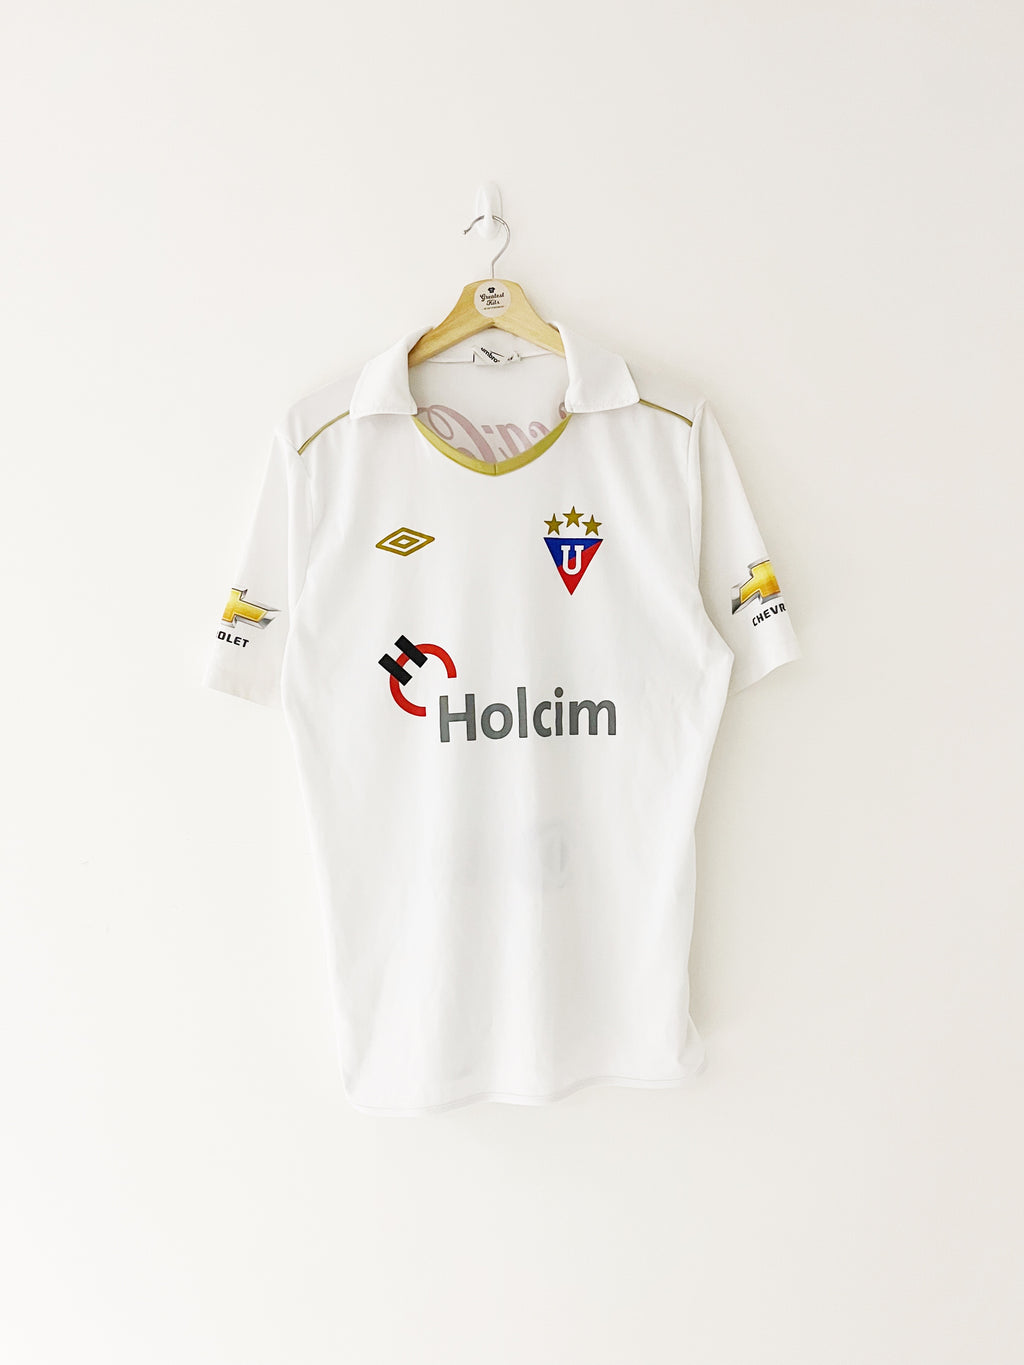 2010 LDU Quito Home Shirt (XL) 9/10